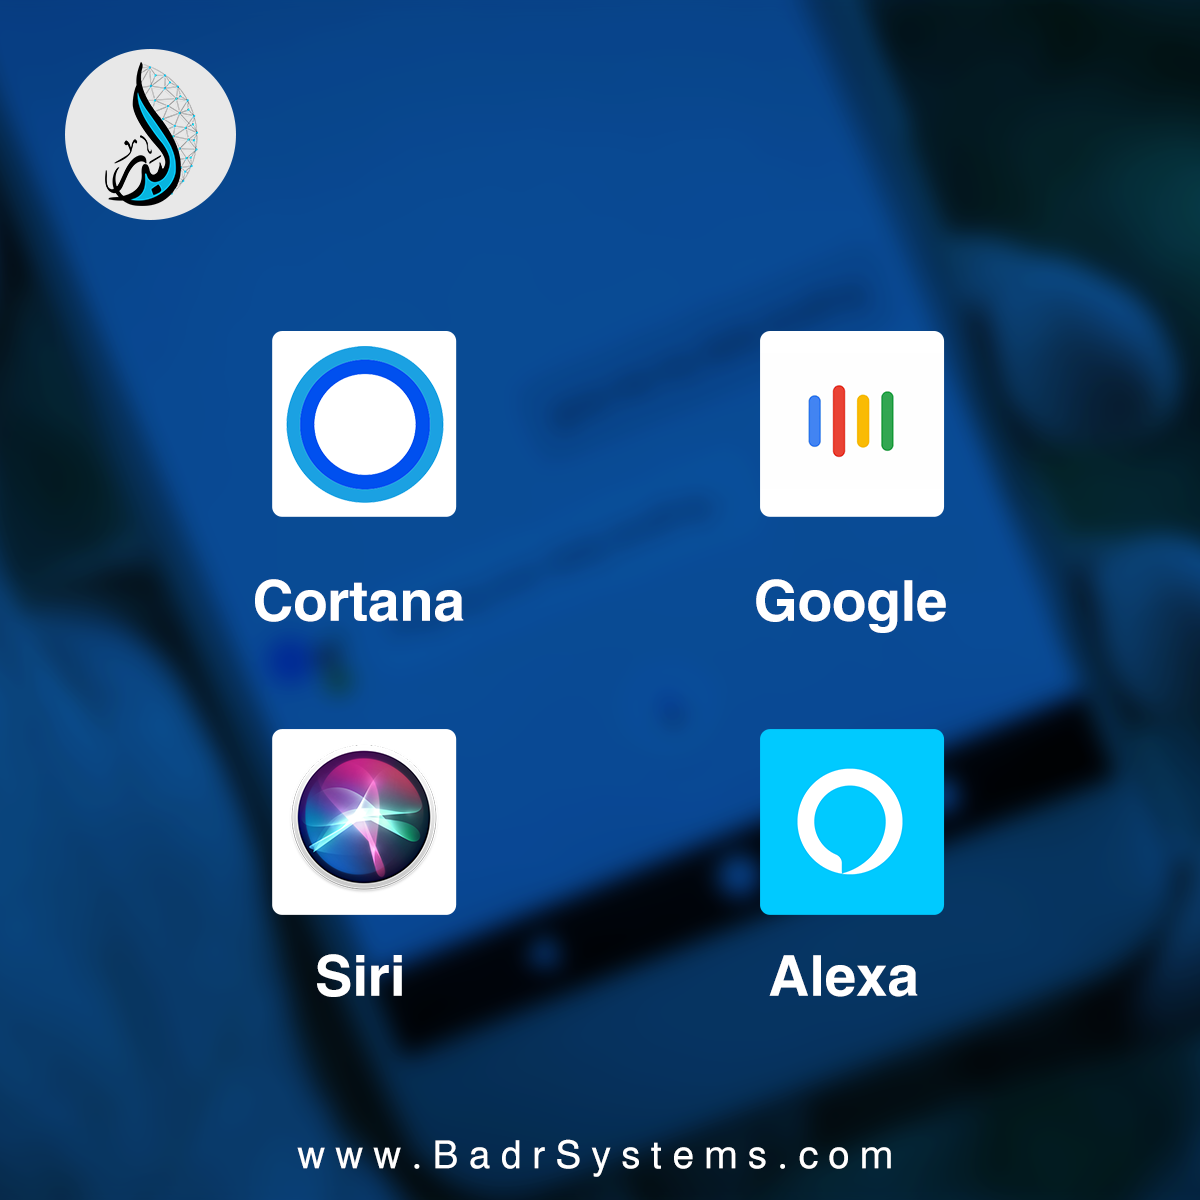 Al-Badr Smart Systems – البدر للنظم الذكيةWriting the applying 